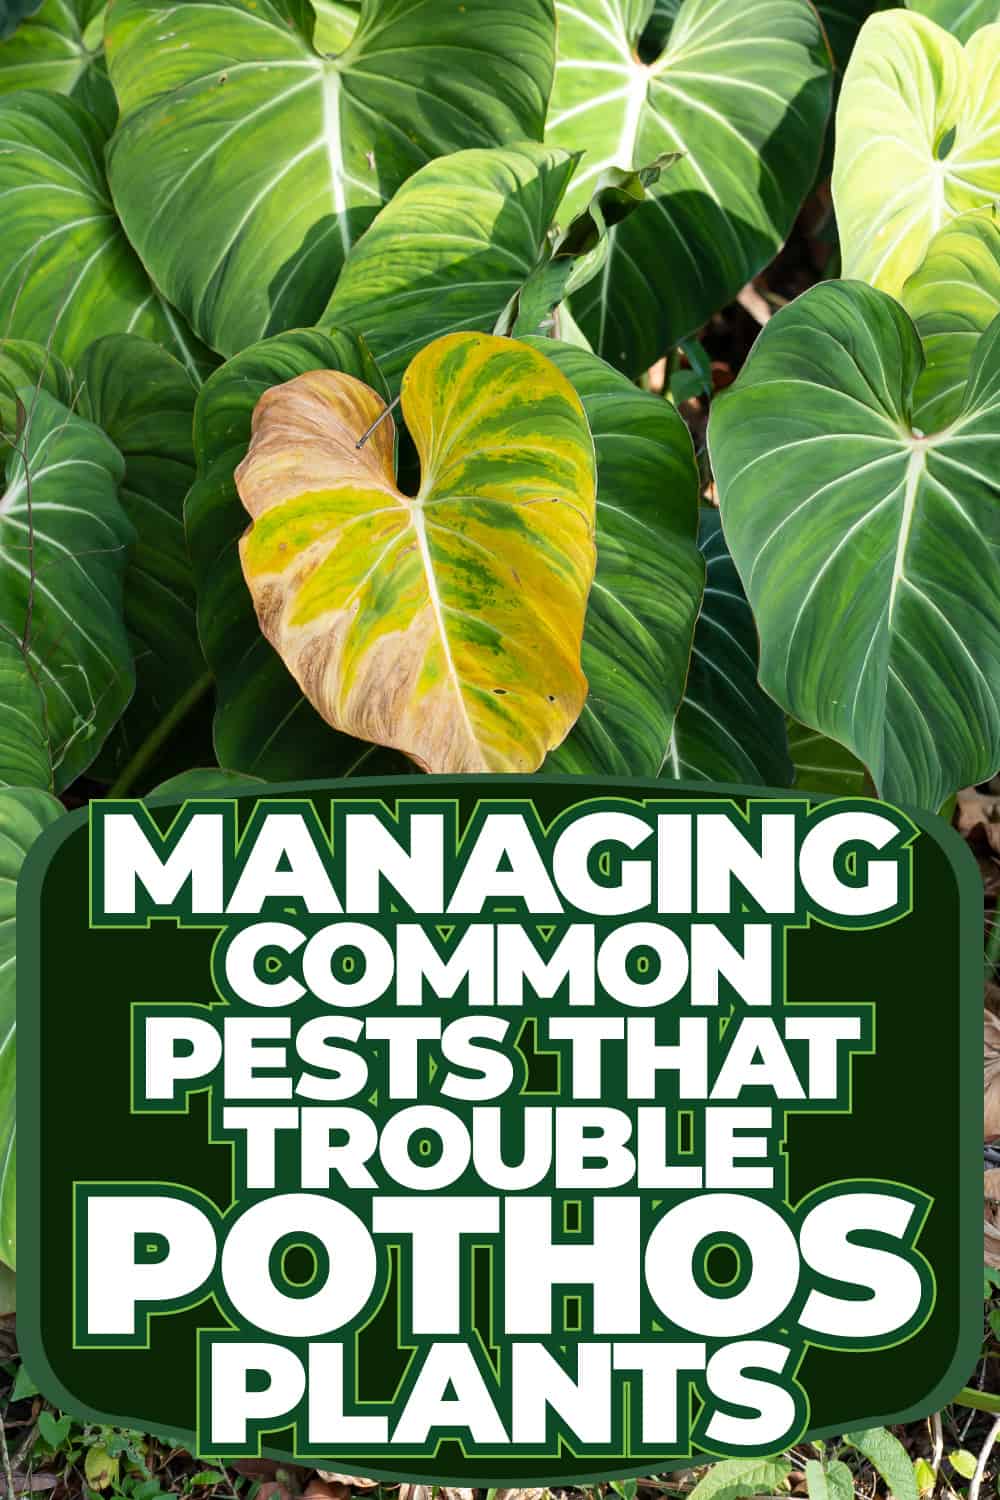 Managing Common Pests That Trouble Pothos Plants